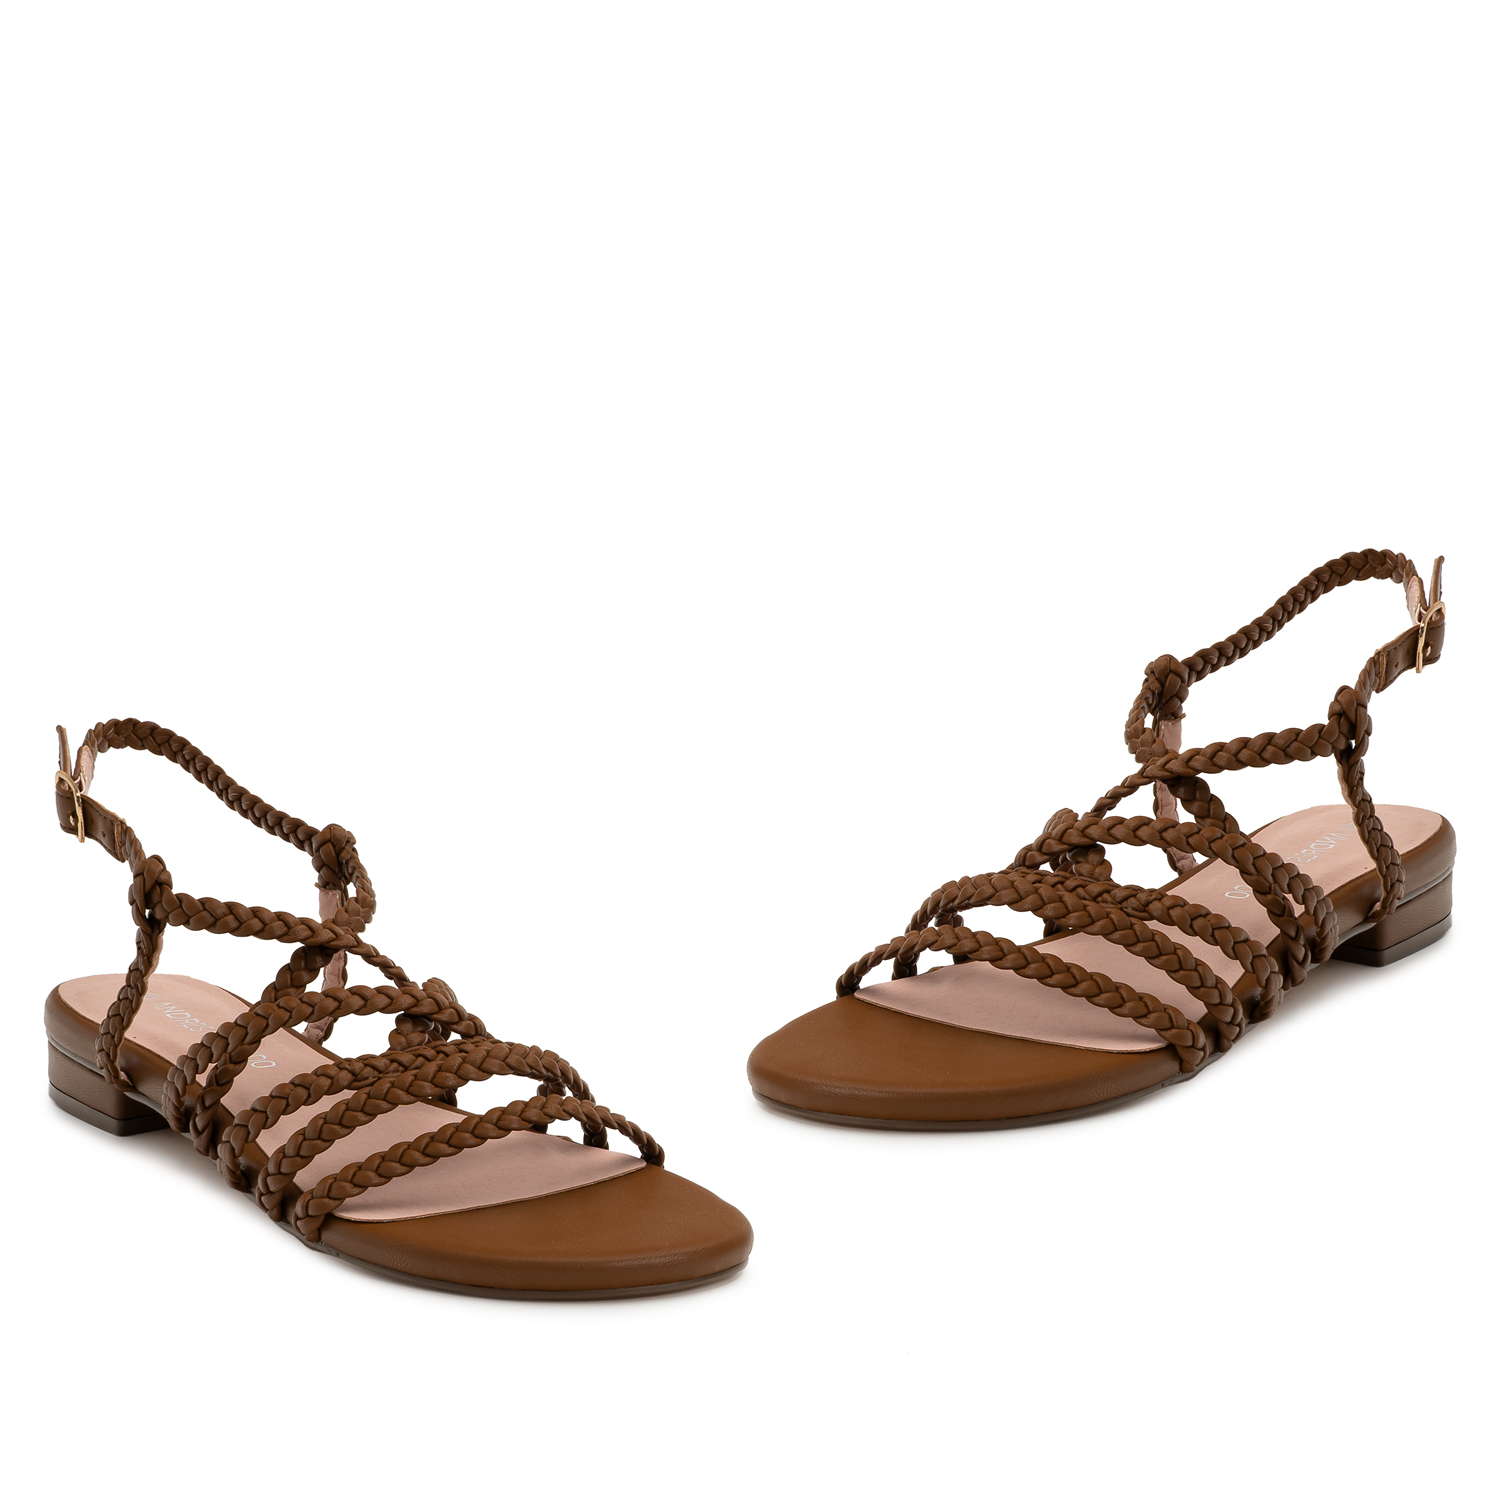 Sandalia trenzada soft marrón 